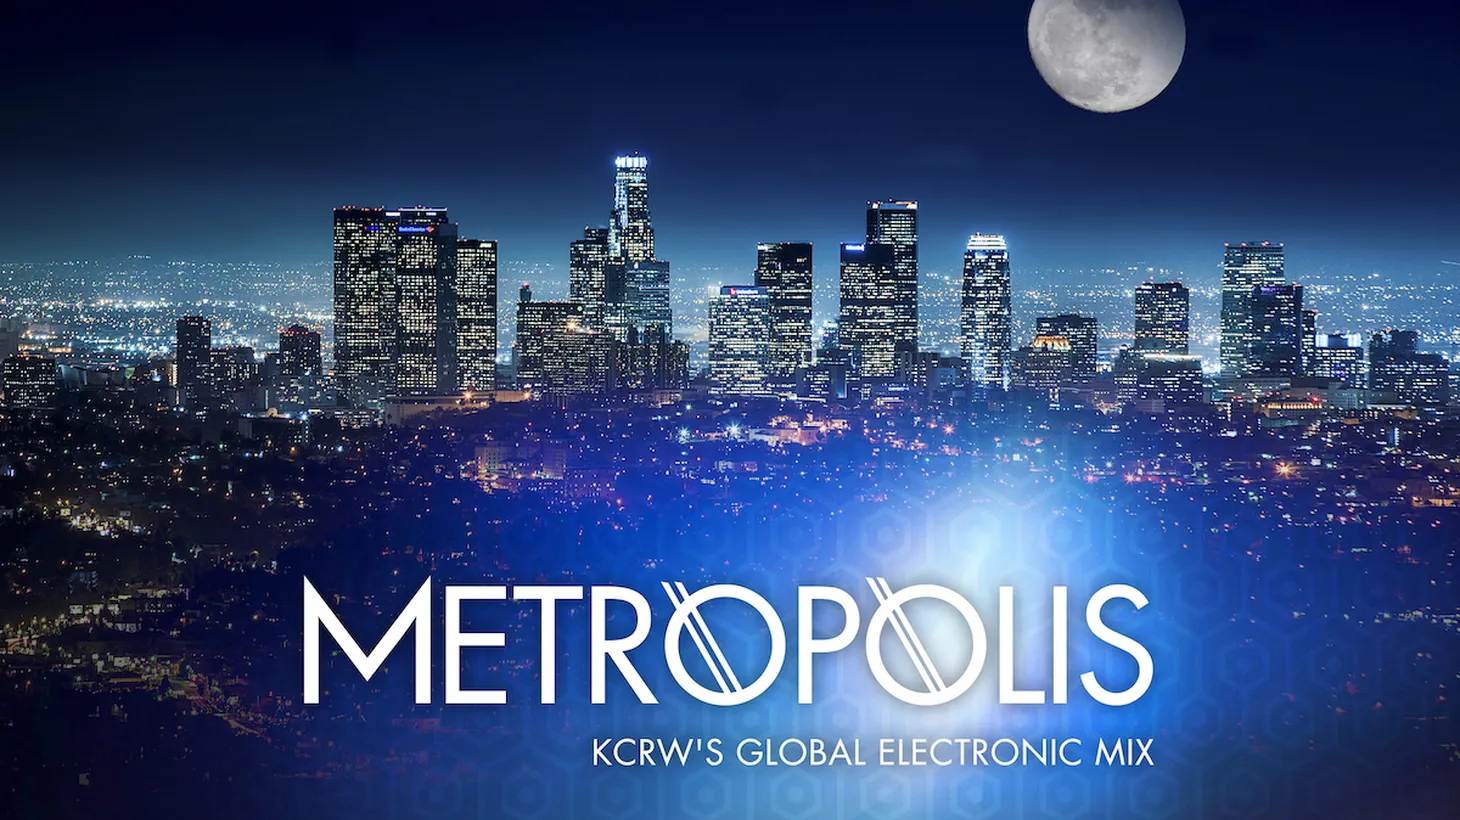 Metropolis playlist, August 28, 2021.